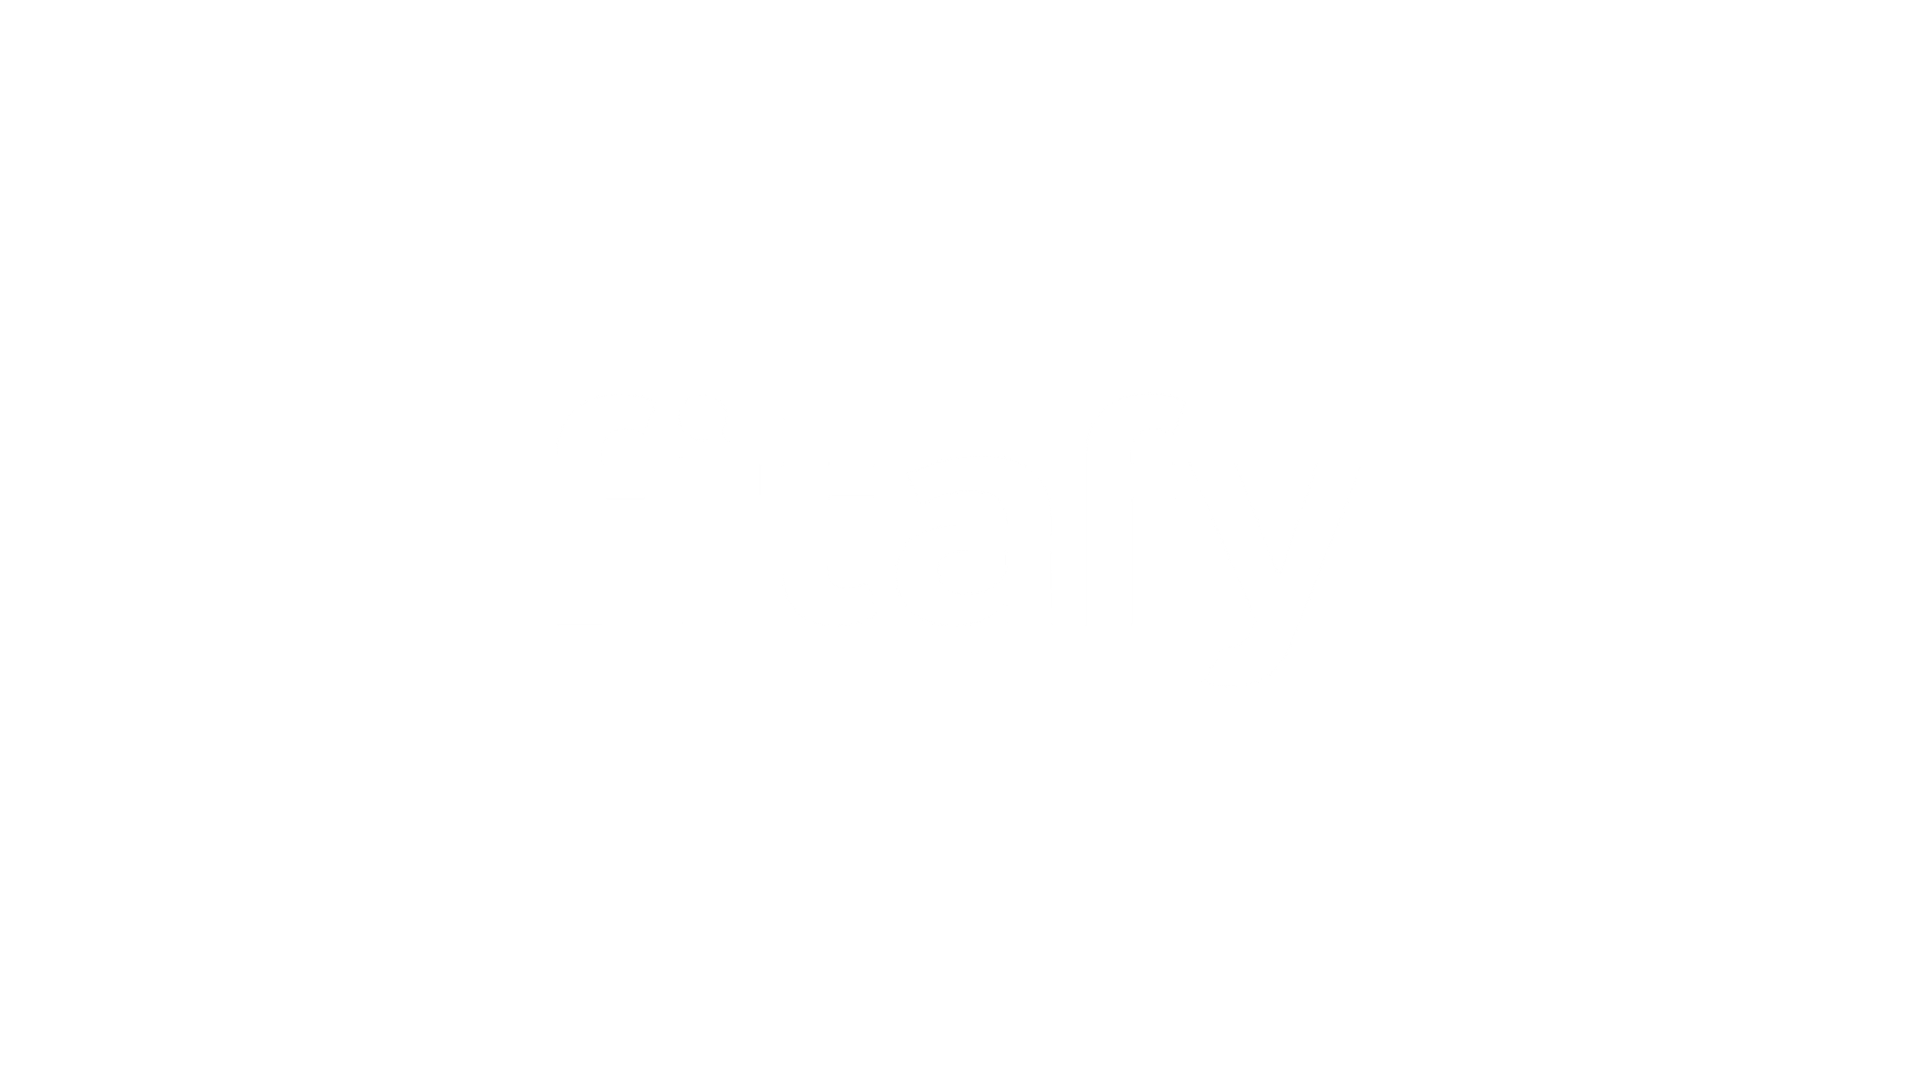 Fitafy Dating App. Sydney PR Agency. The Buzz Group.